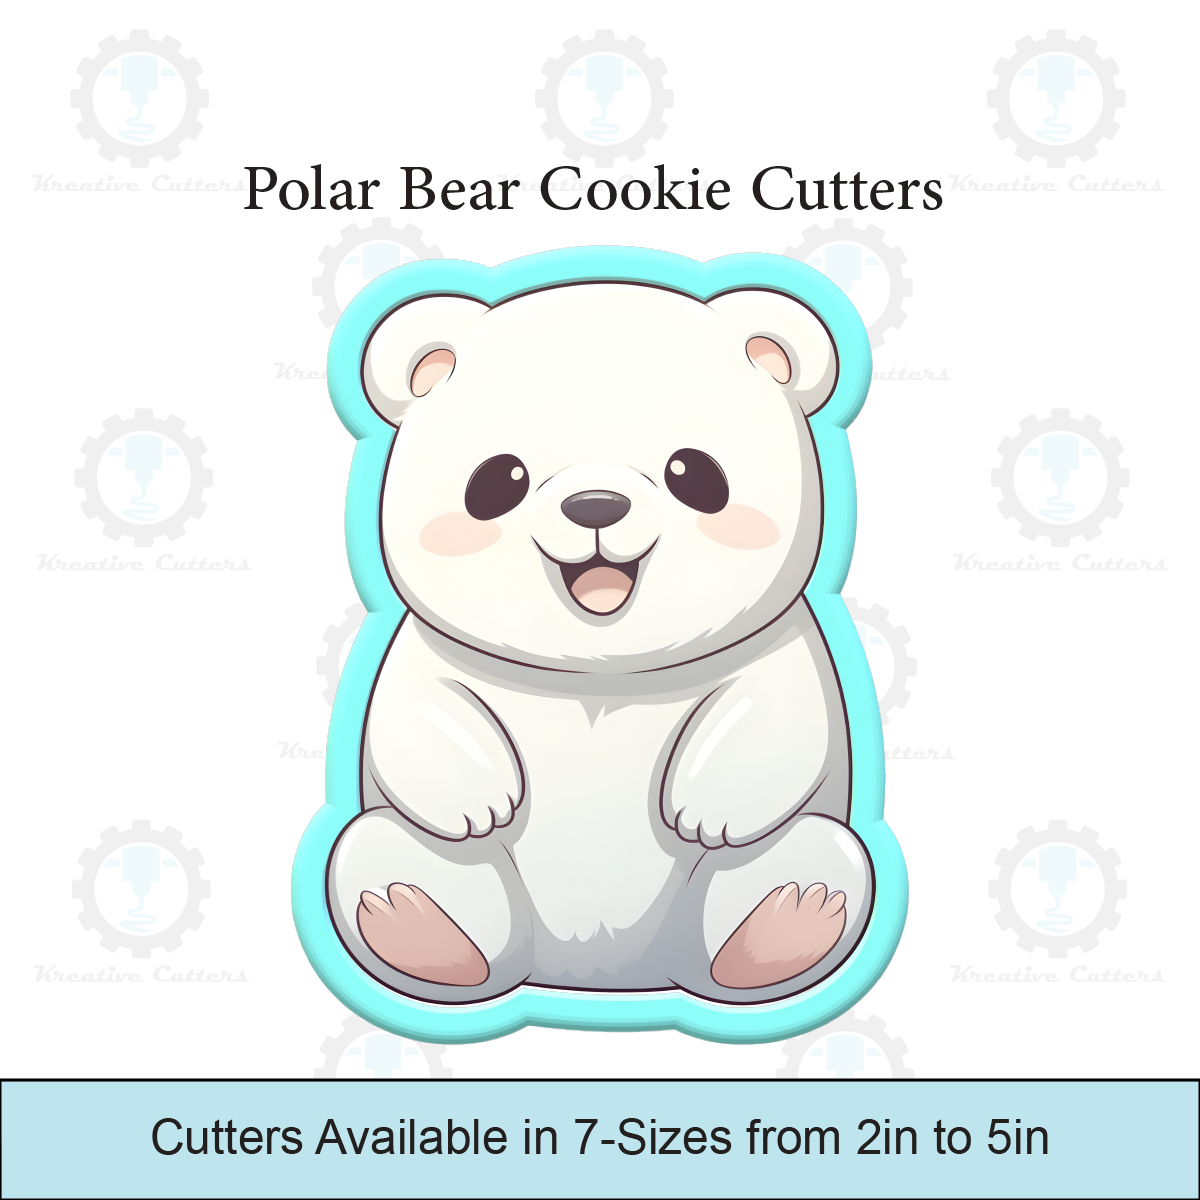 Polar Bear Cookie Cutters